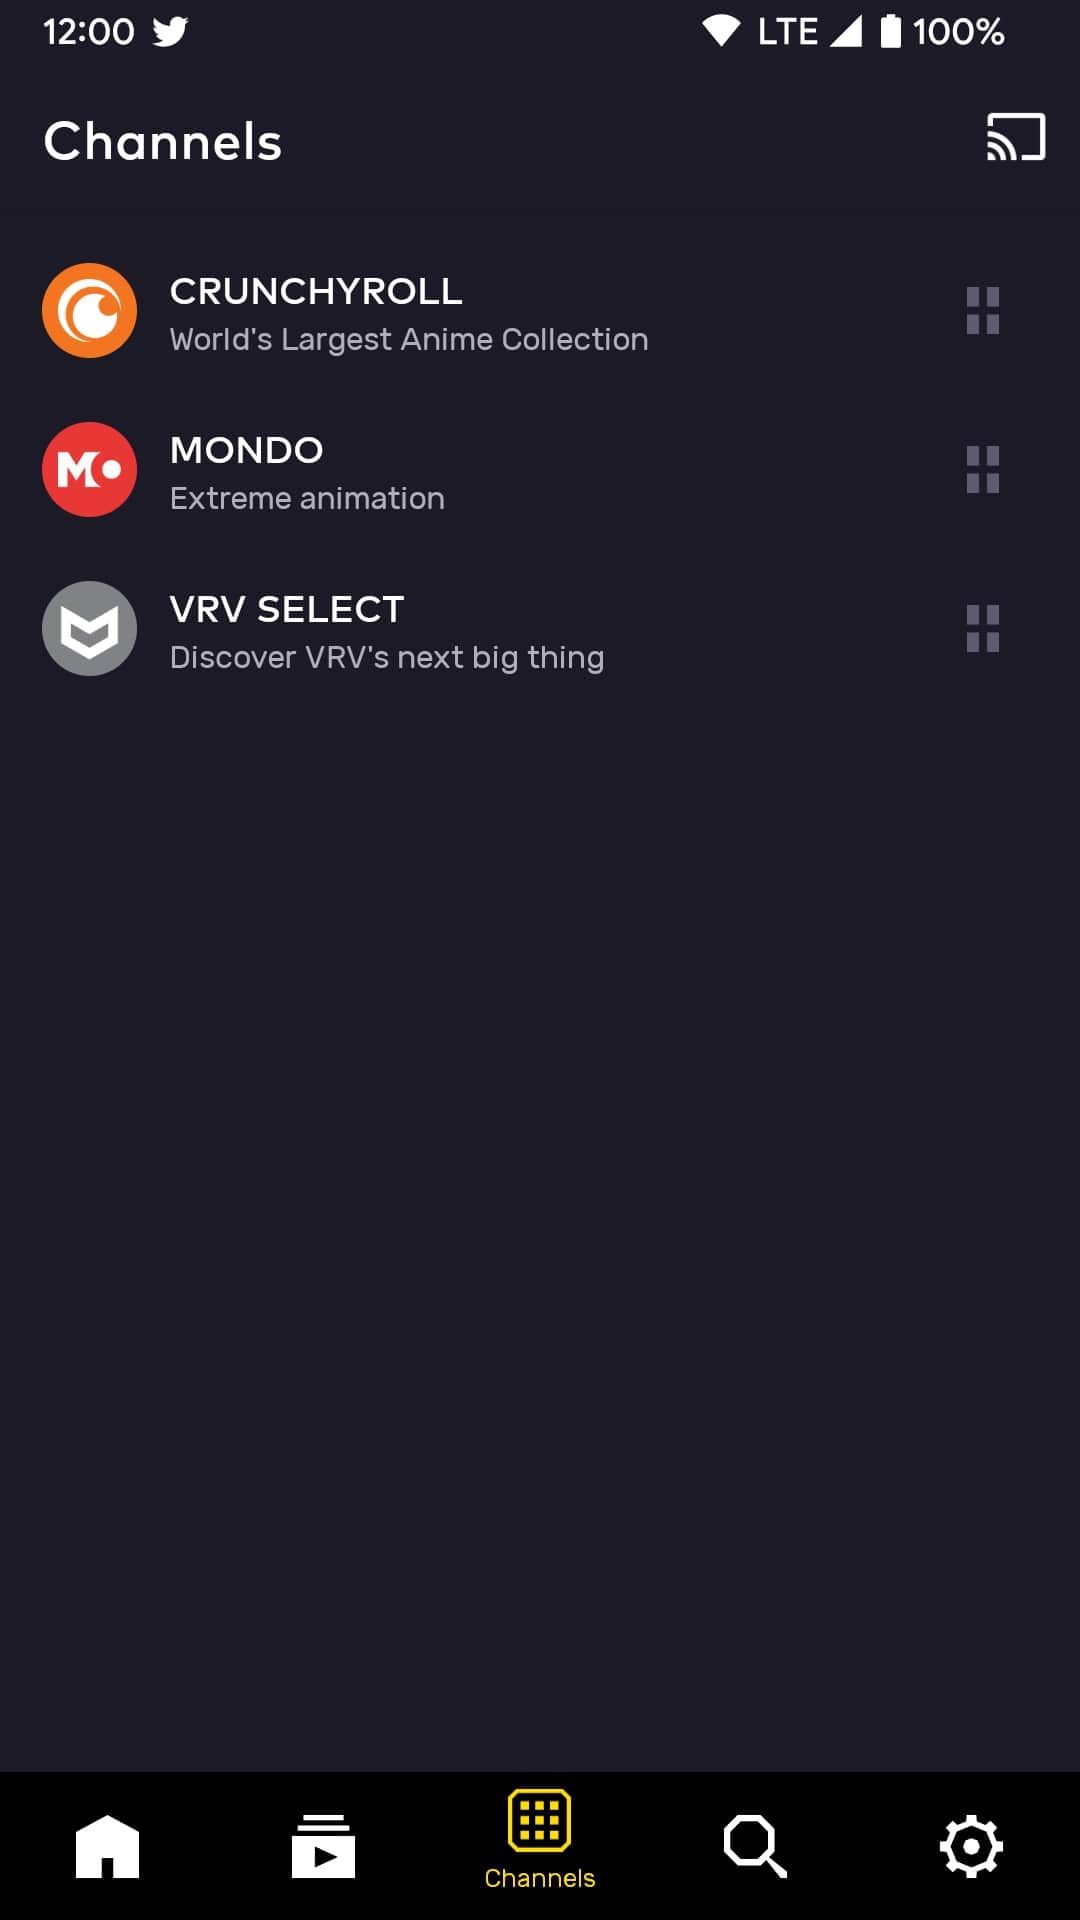 VRV app's Channels page showing Crunchyroll, Mondo, and VRV Select channels